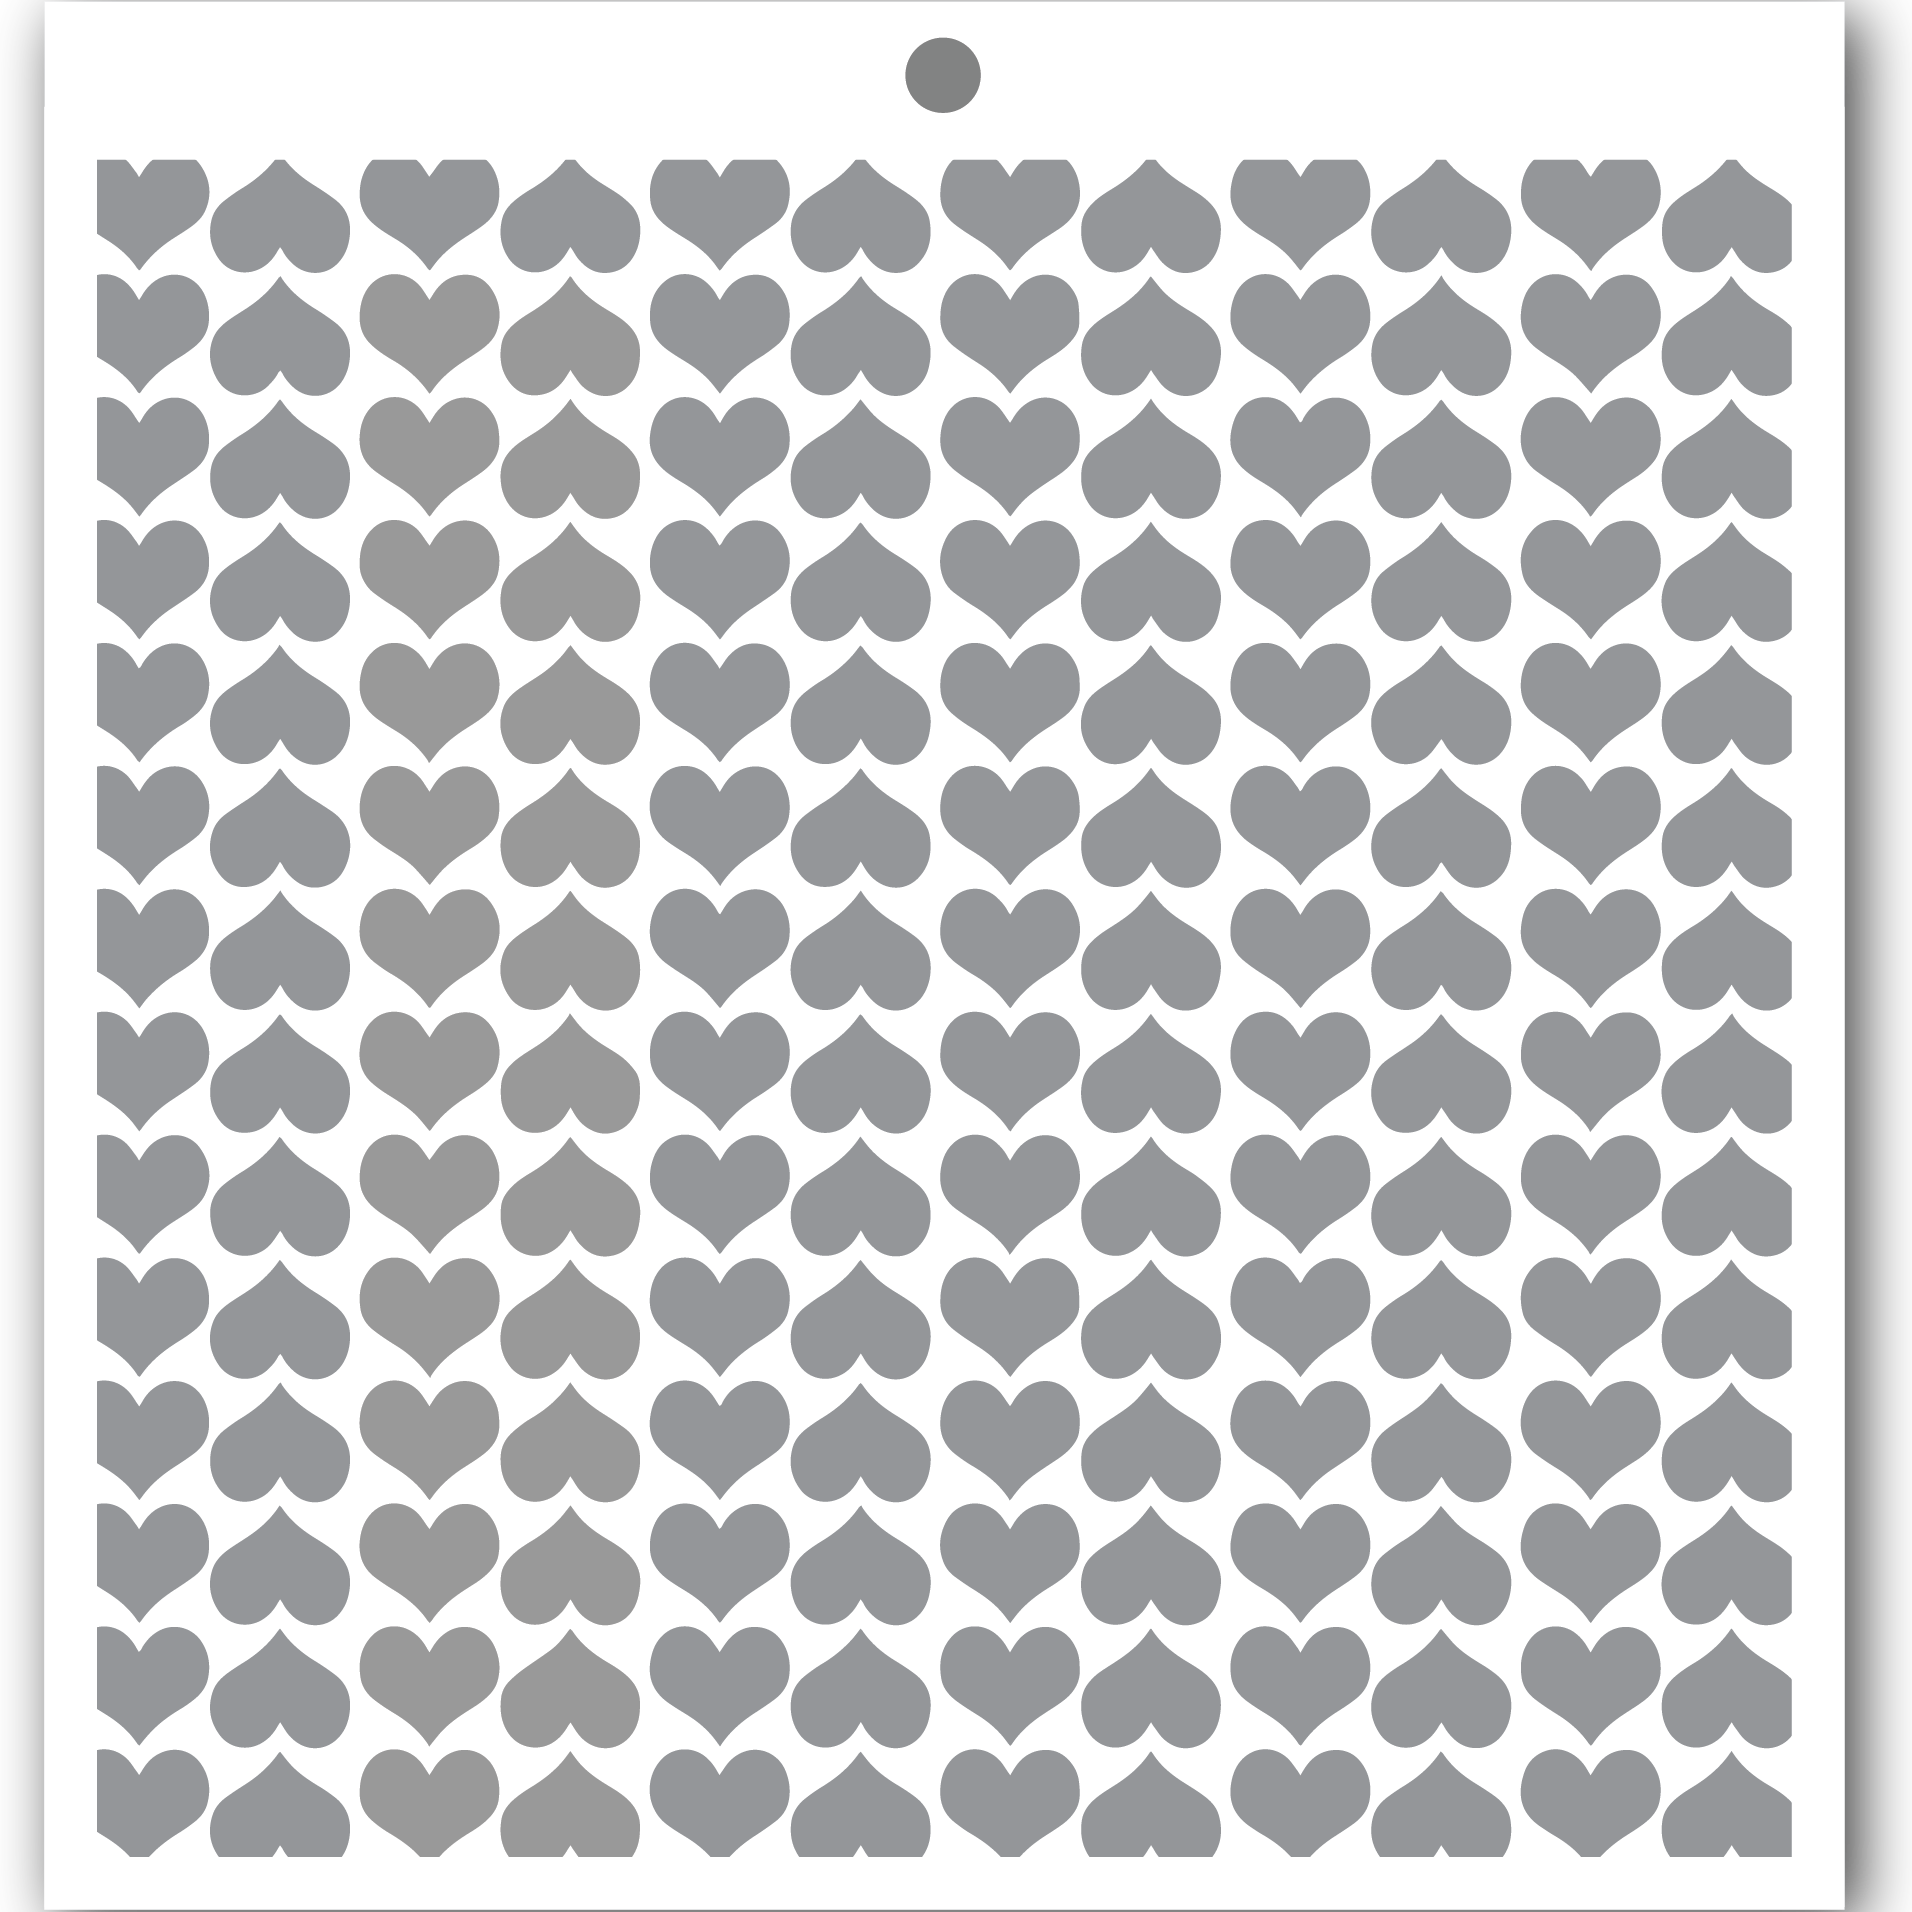 Rain of Hearts - Penguin Perfect Patterns